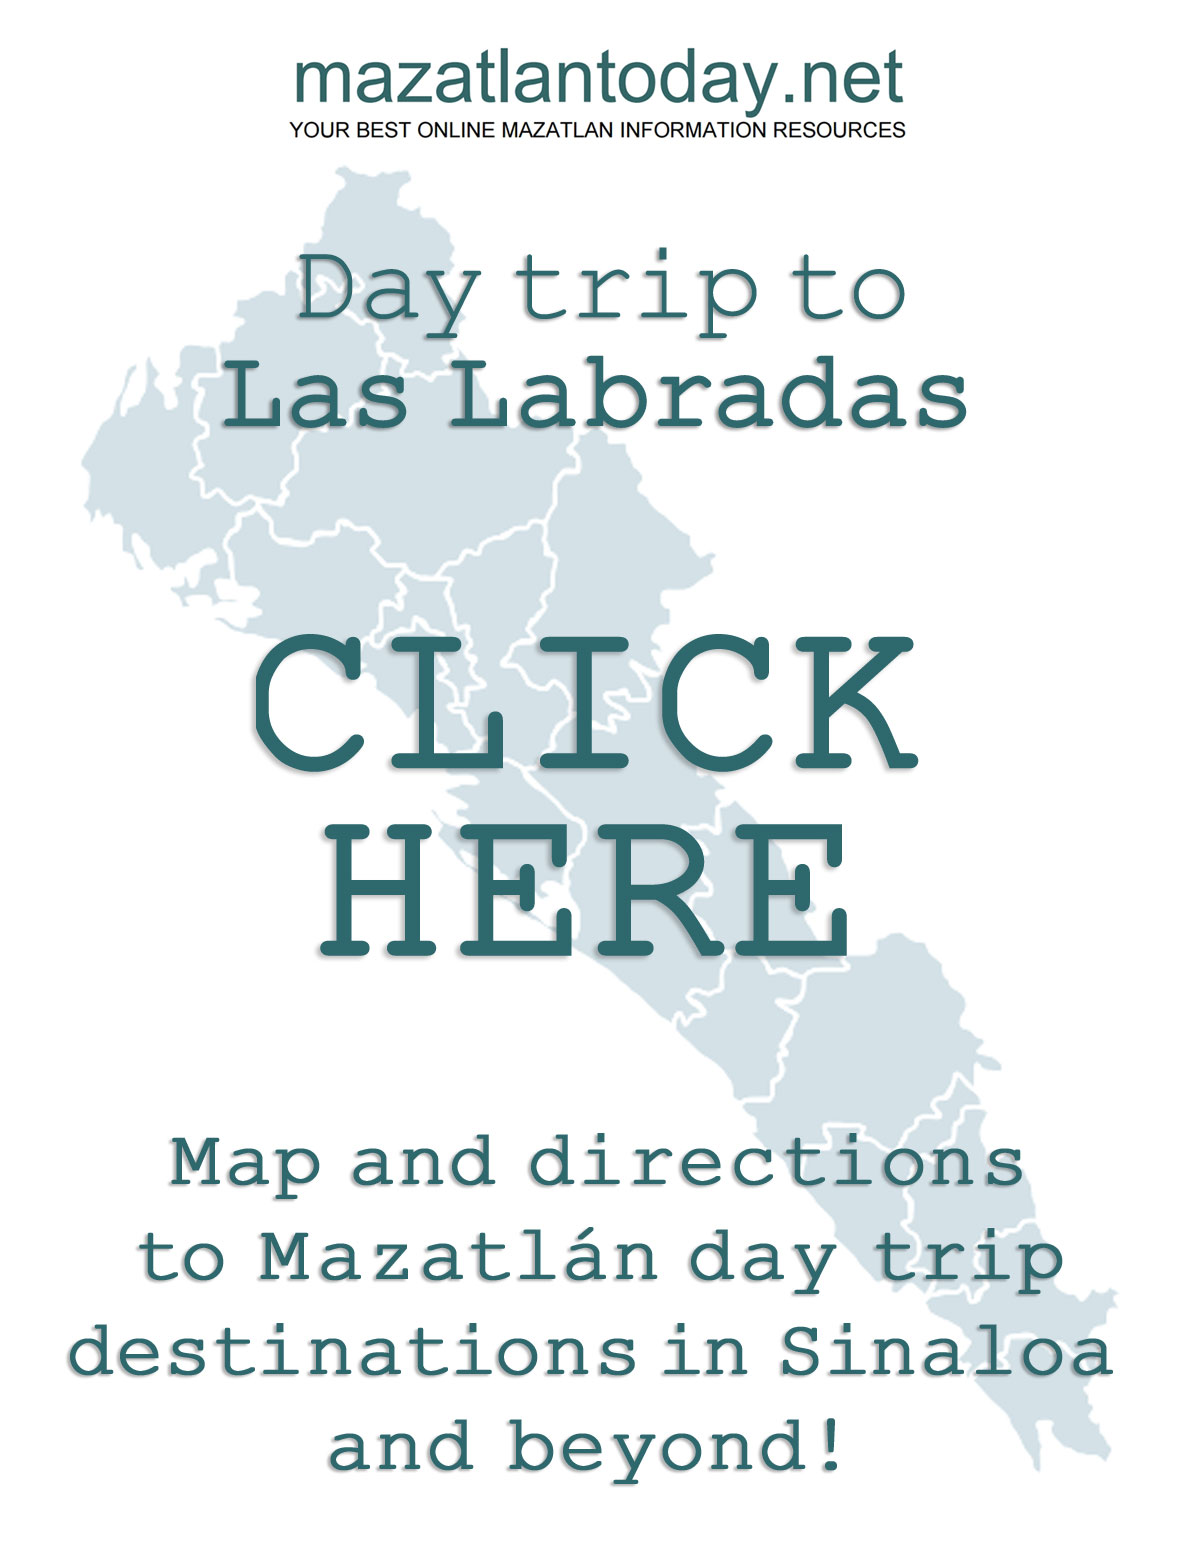 Download free Mazatlan - Las Labradas day trip map and directions